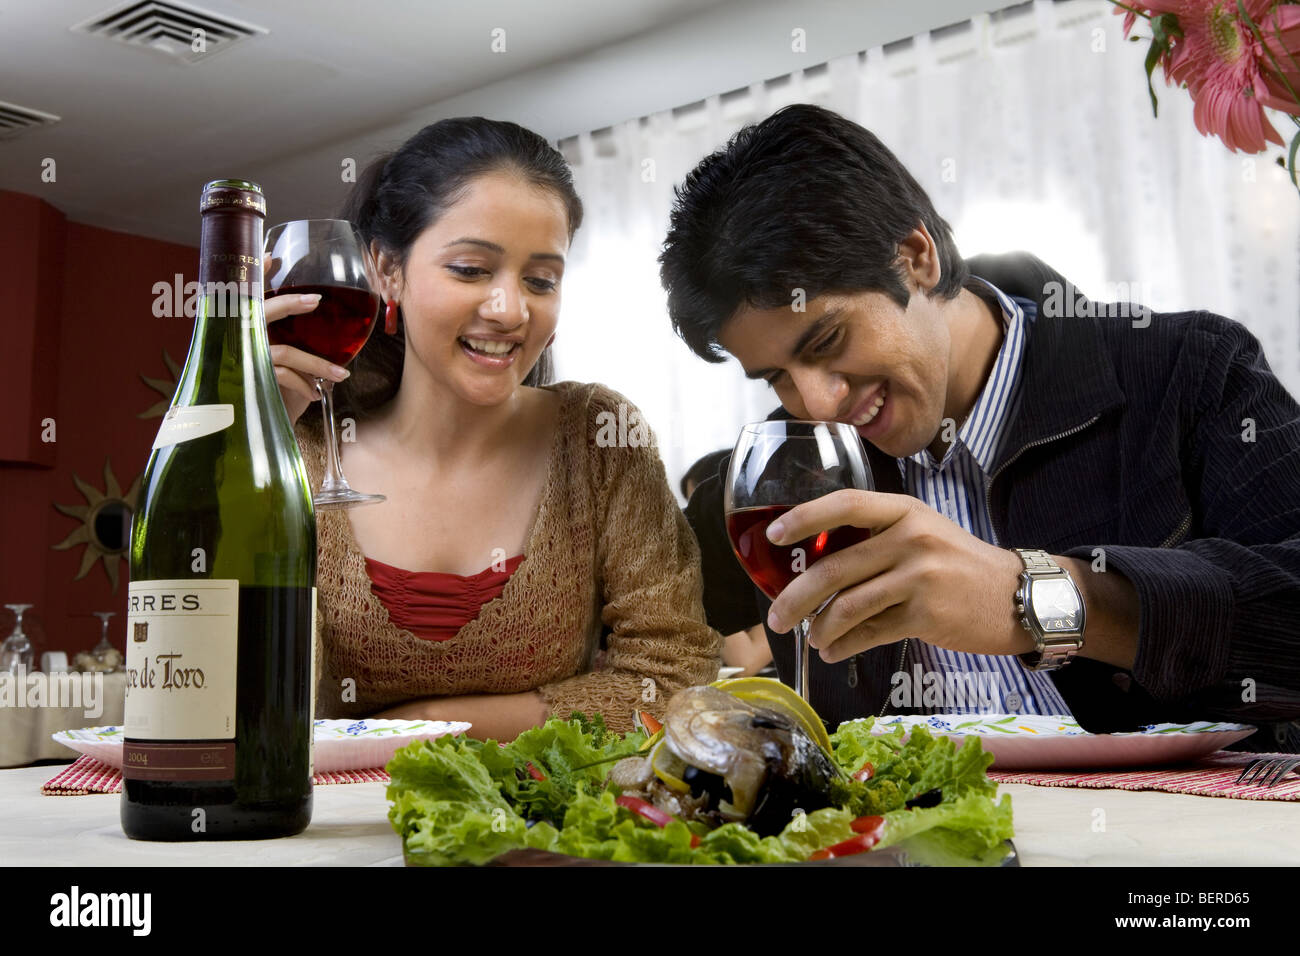 Couple enjoying a meal Stock Photo